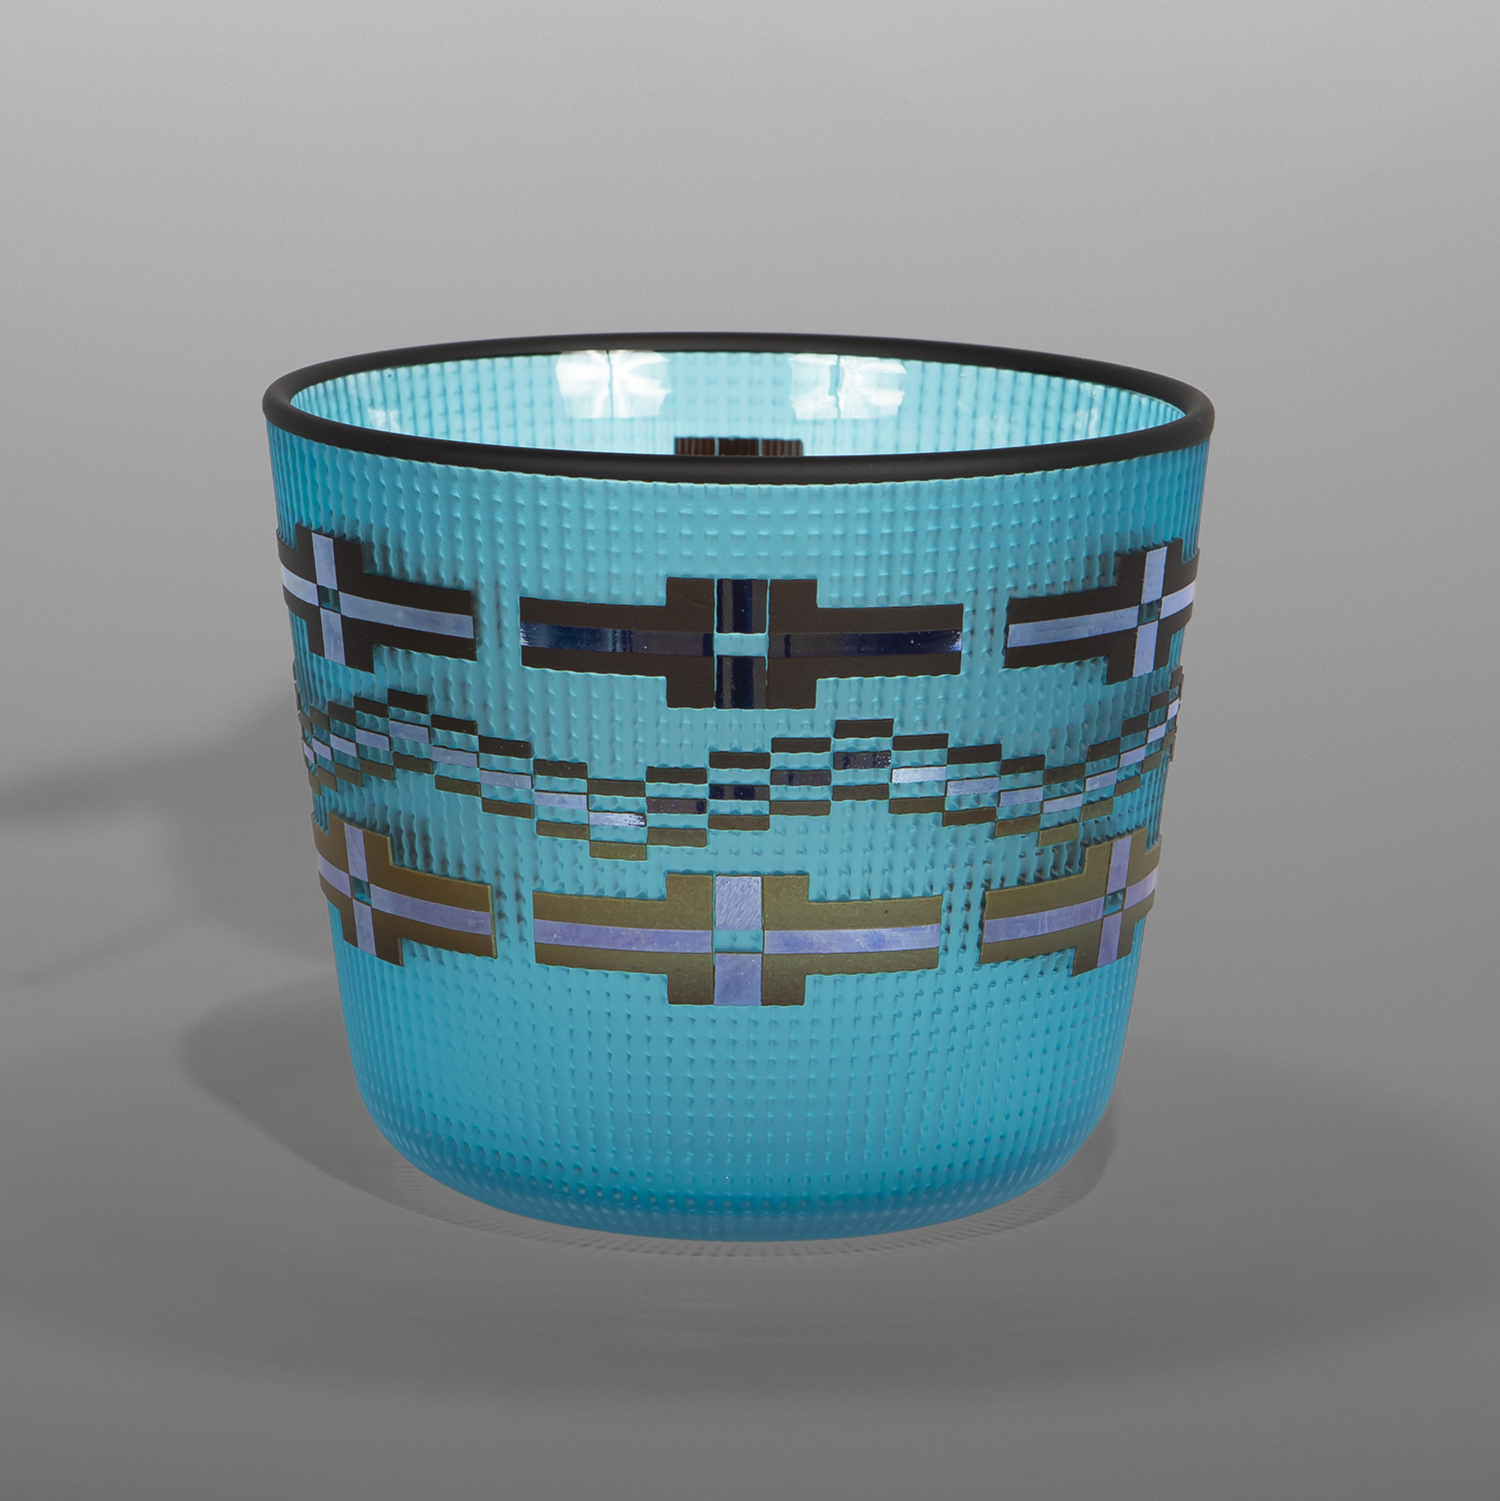 Midnight Blue Basket
Preston Singletary
TlingitBlown & sand-carved glass
5" x 6¼"
$3000